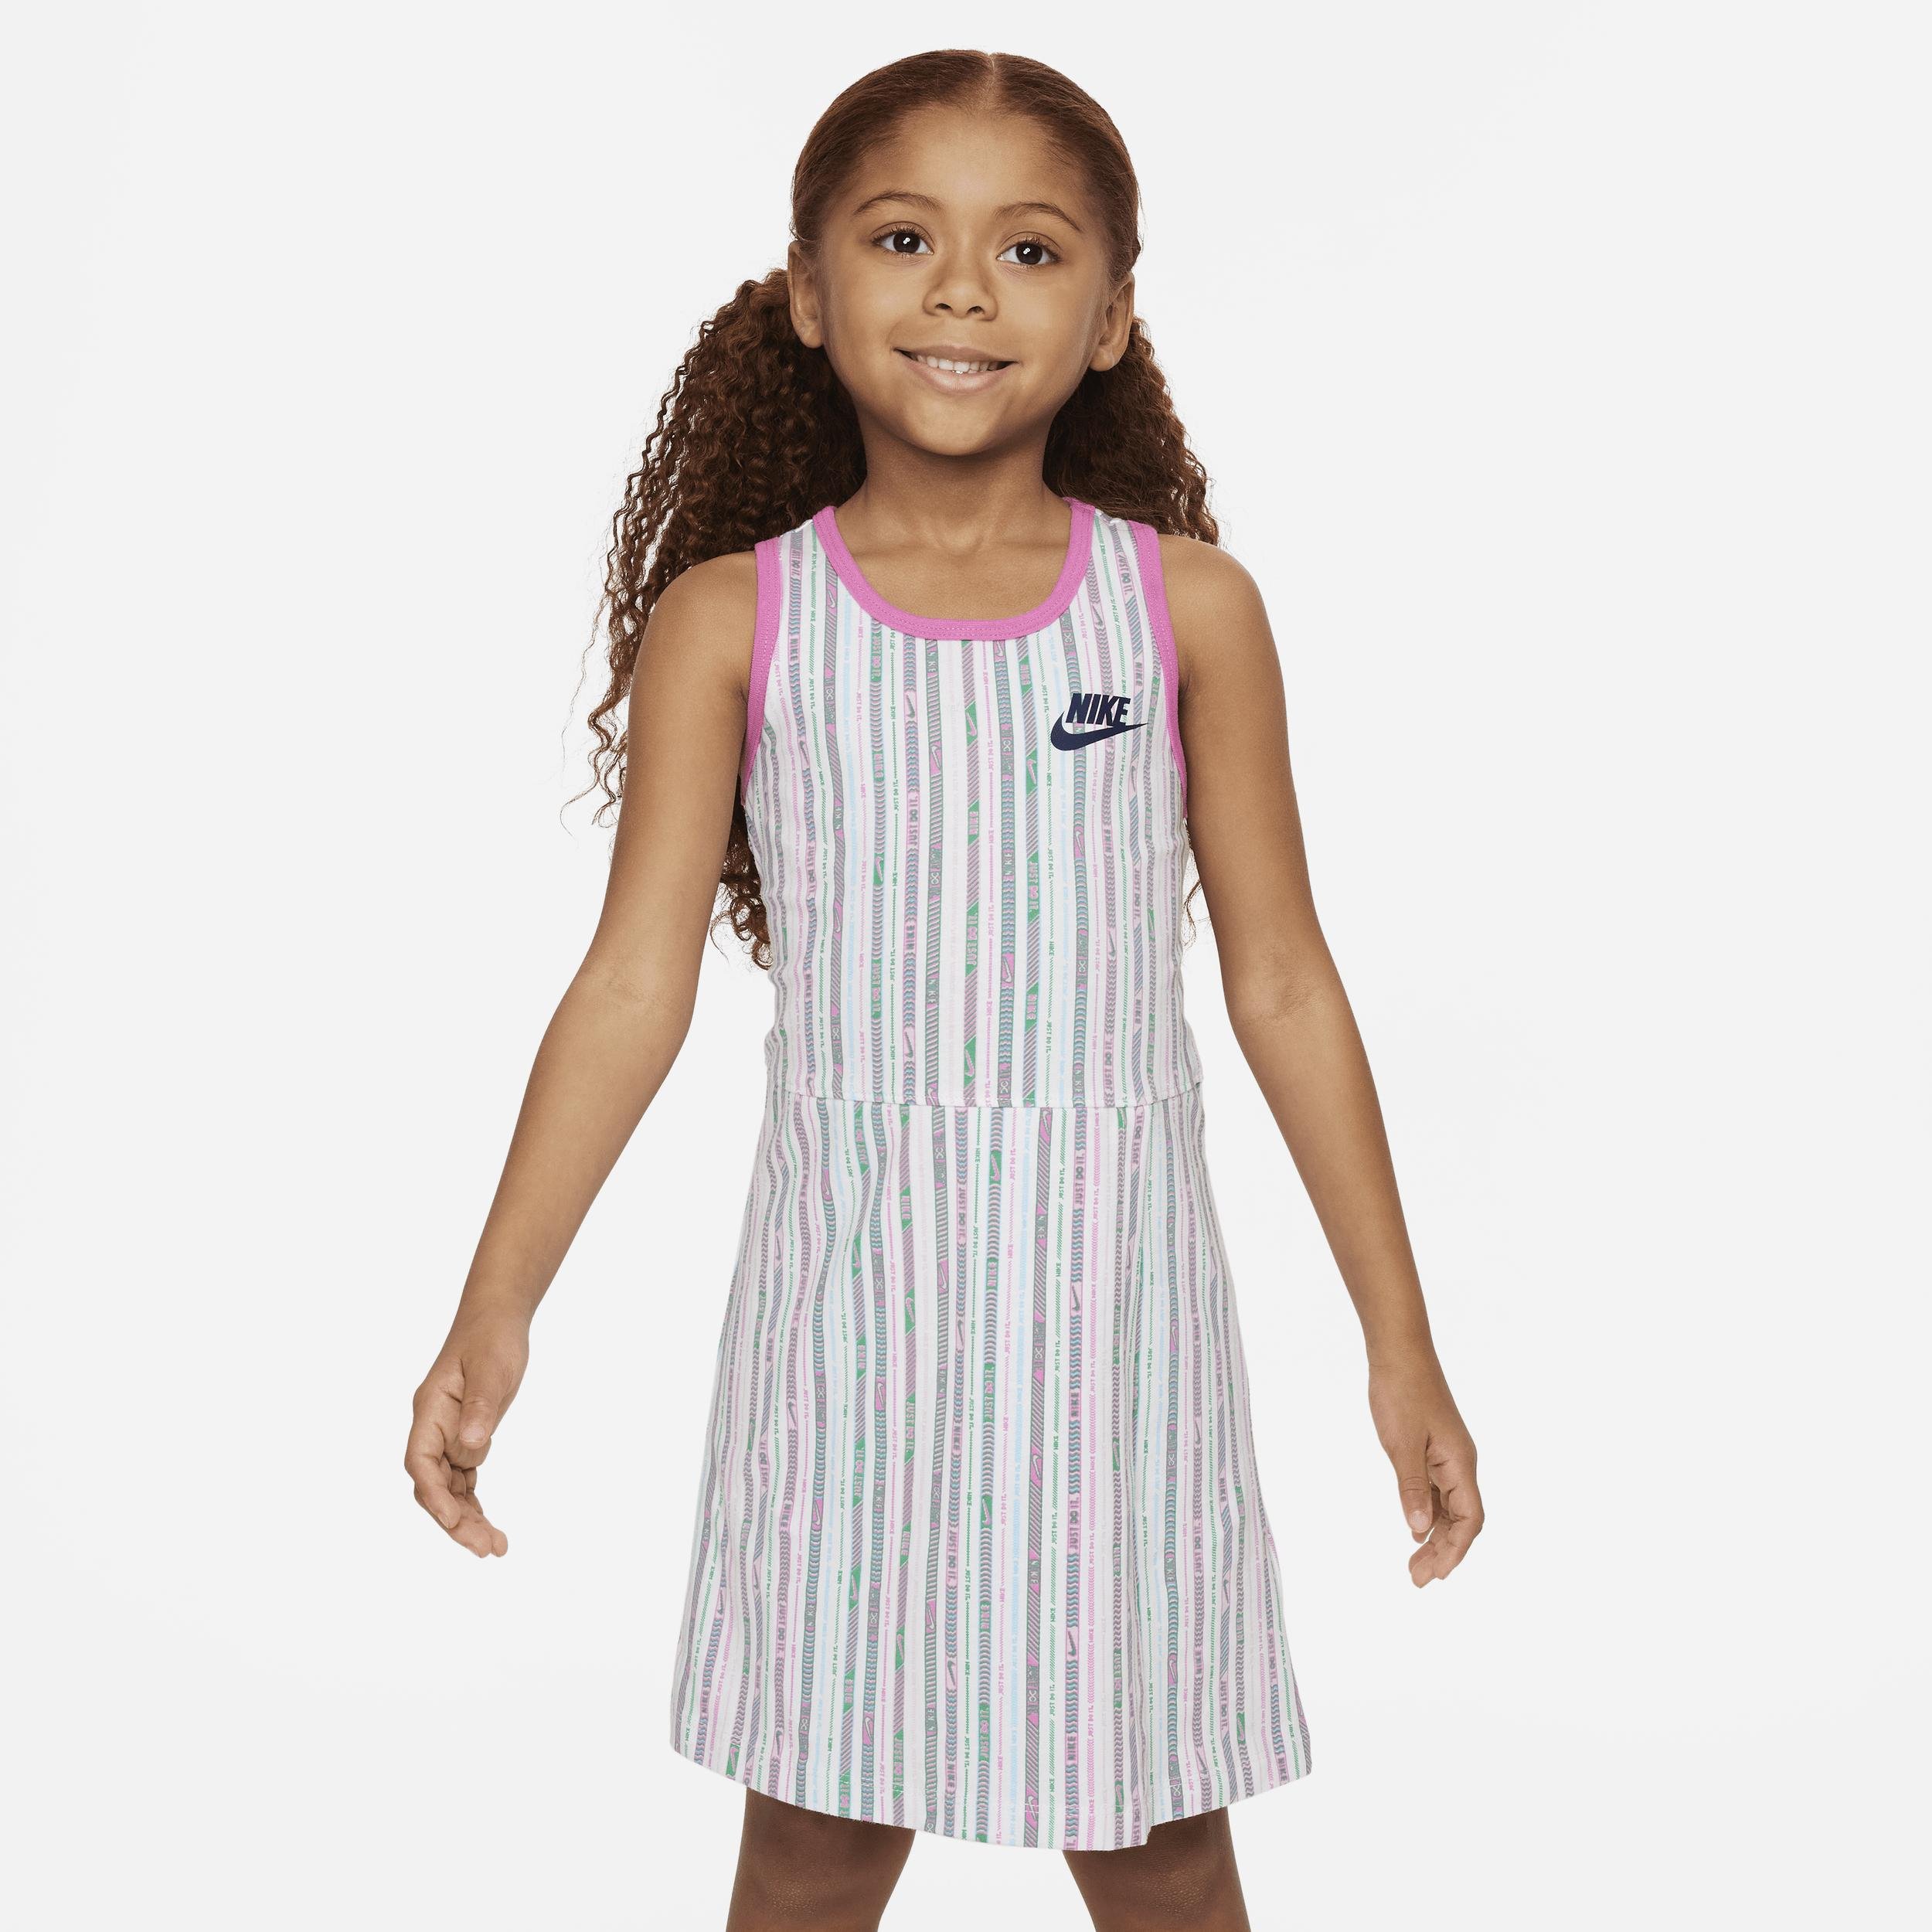 Nike Happy Camper Little Kids' Printed Dress by NIKE